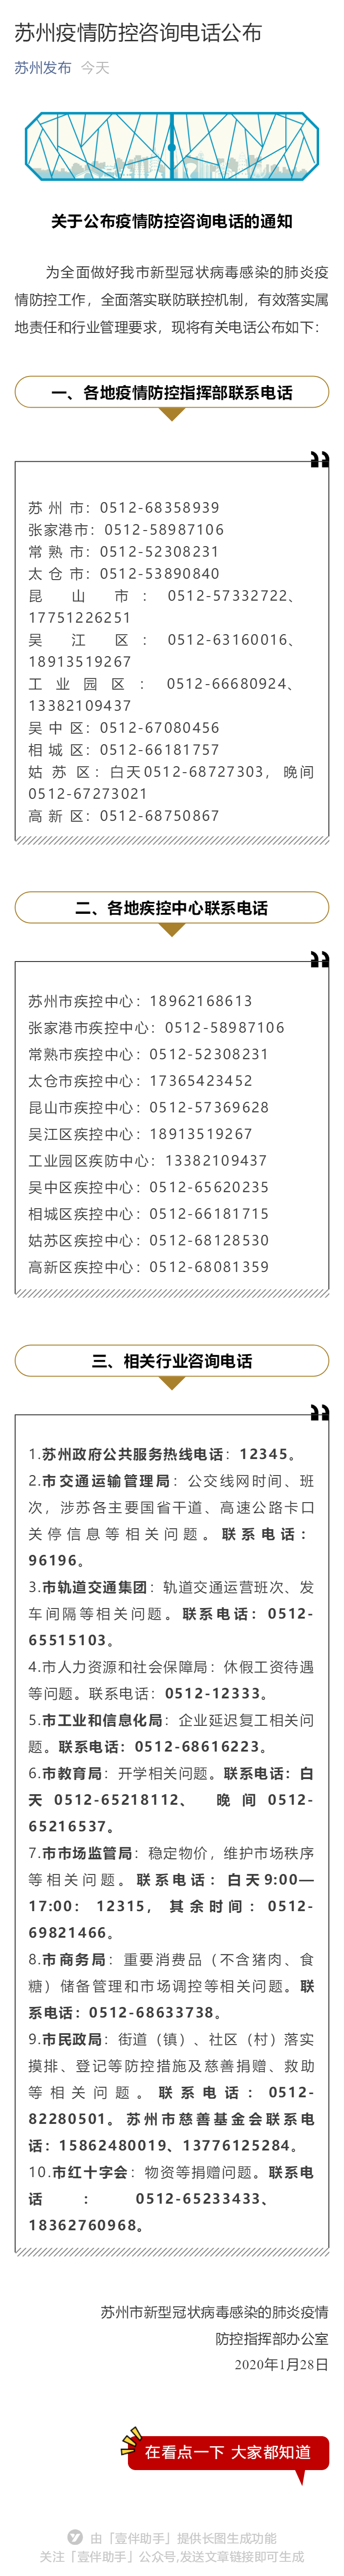 20200129_1550_yiban_screenshot.png